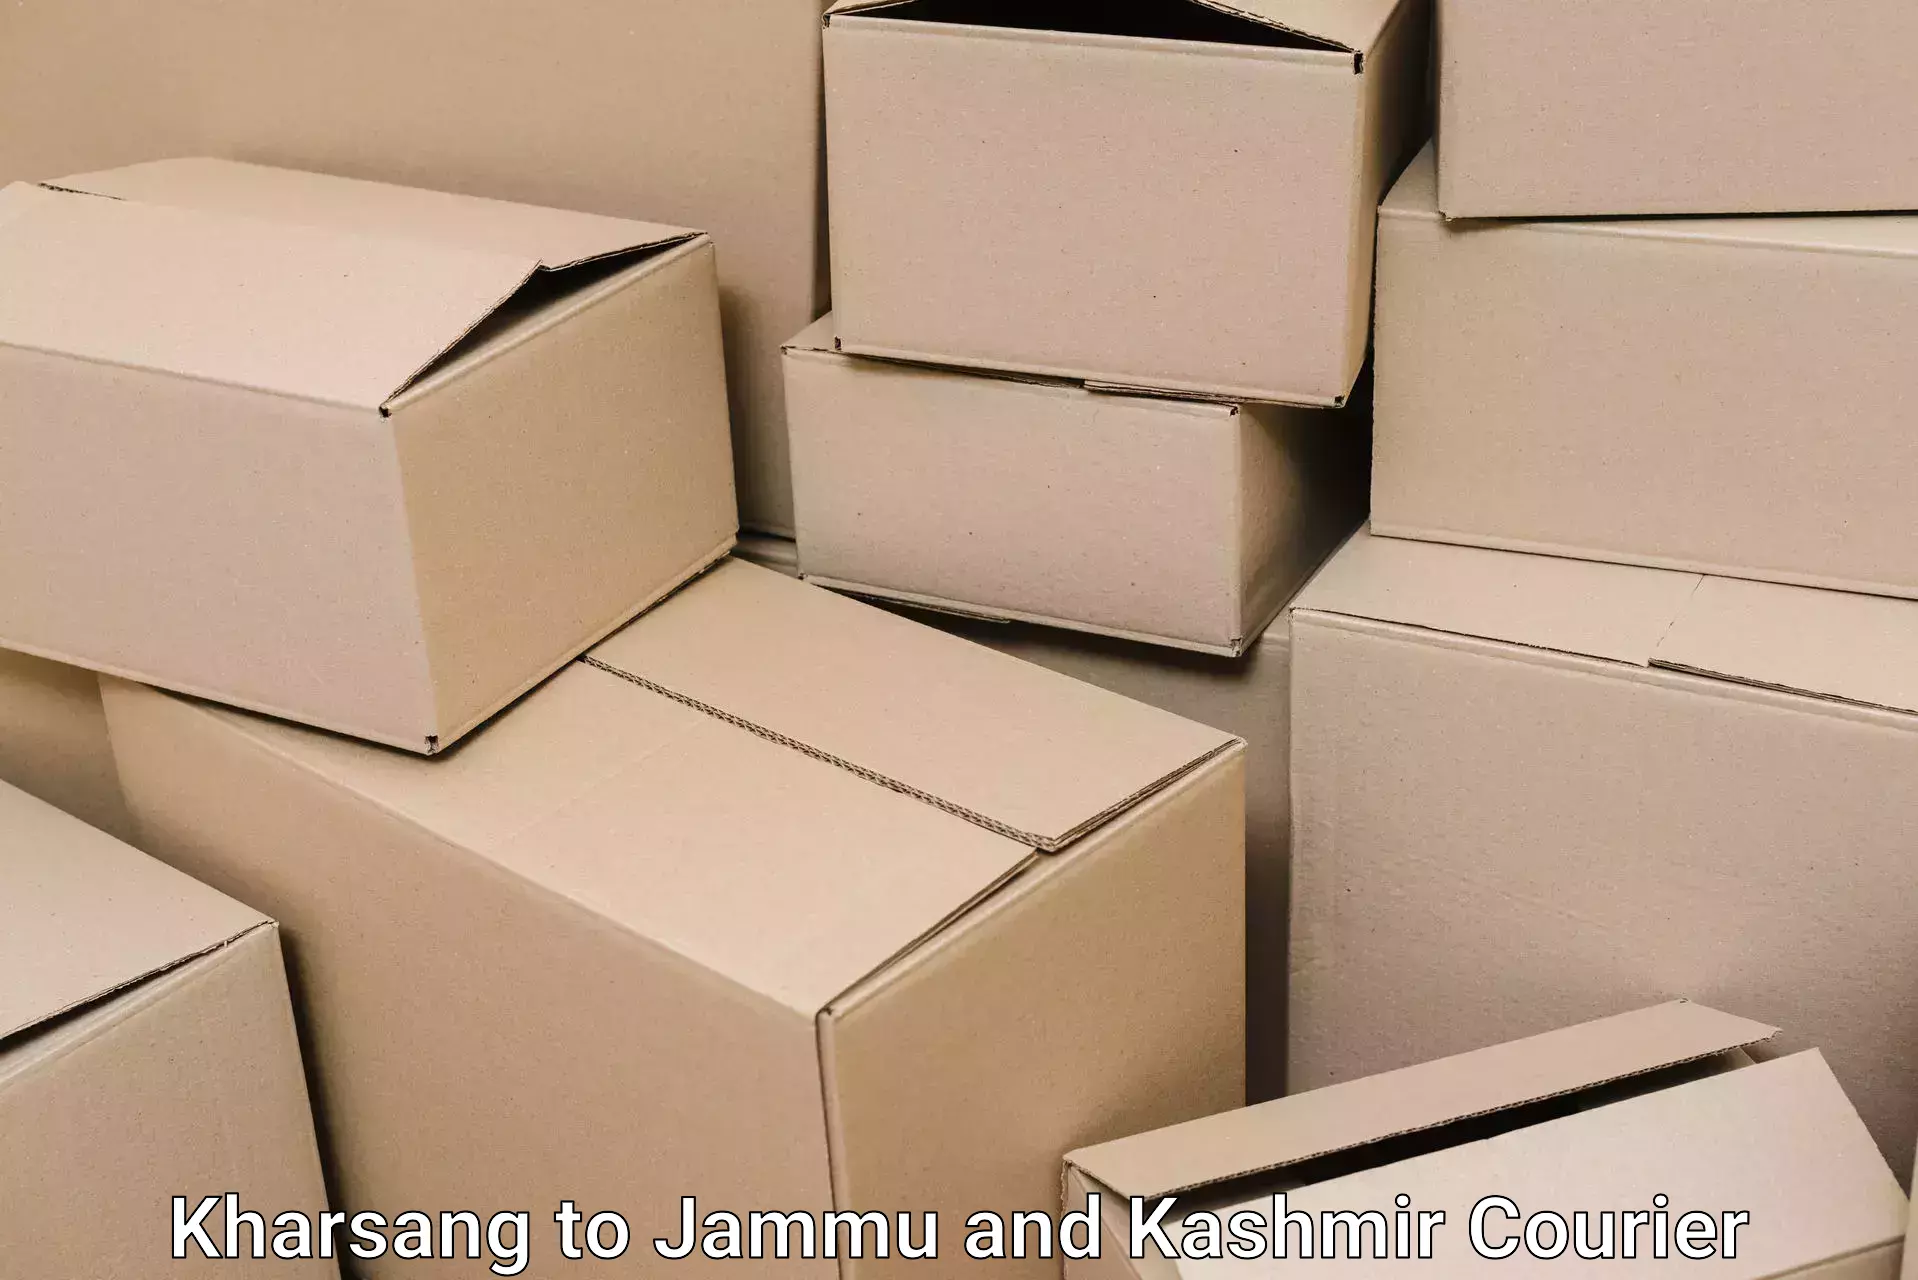 Quality moving company Kharsang to Srinagar Kashmir